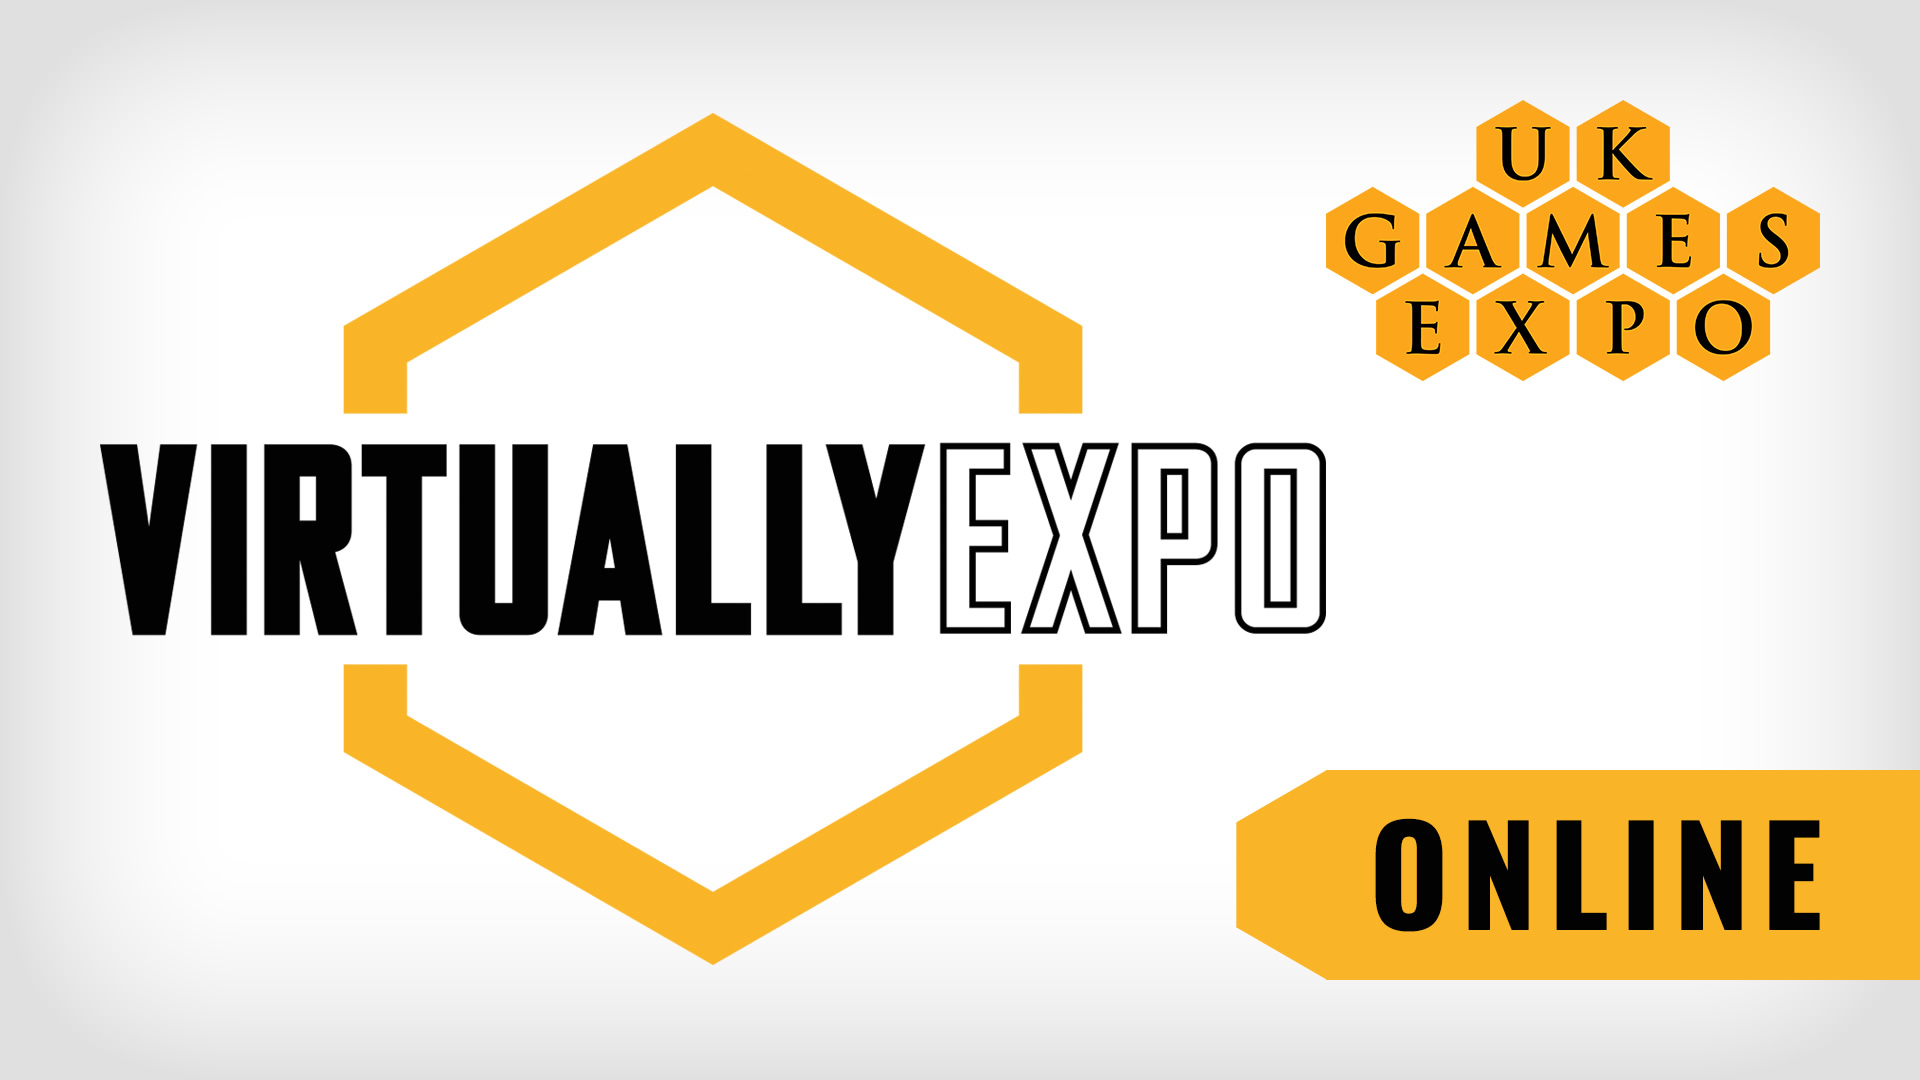 Virtually_Expo_UK_Games_Expo_Online